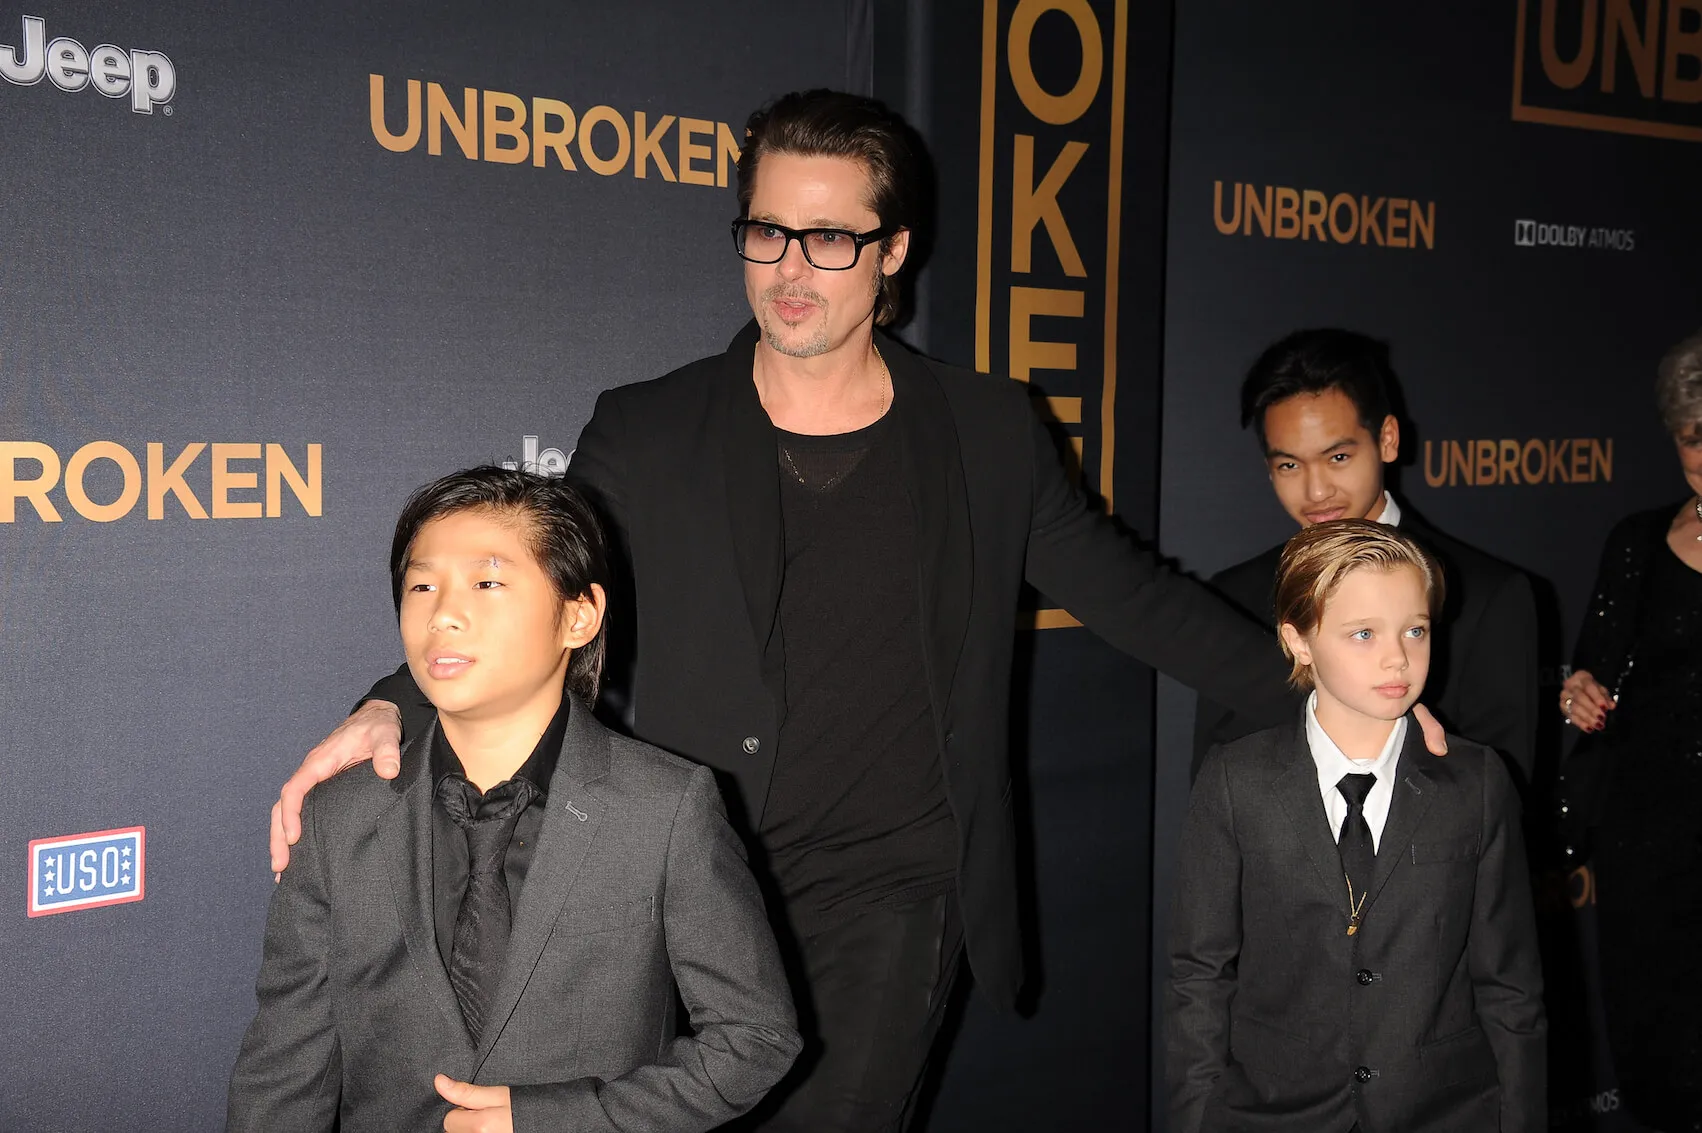 Brad Pitt with Pax Jolie-Pitt, Shiloh Jolie-Pitt, and Maddox Jolie-Pitt at a movie premiere